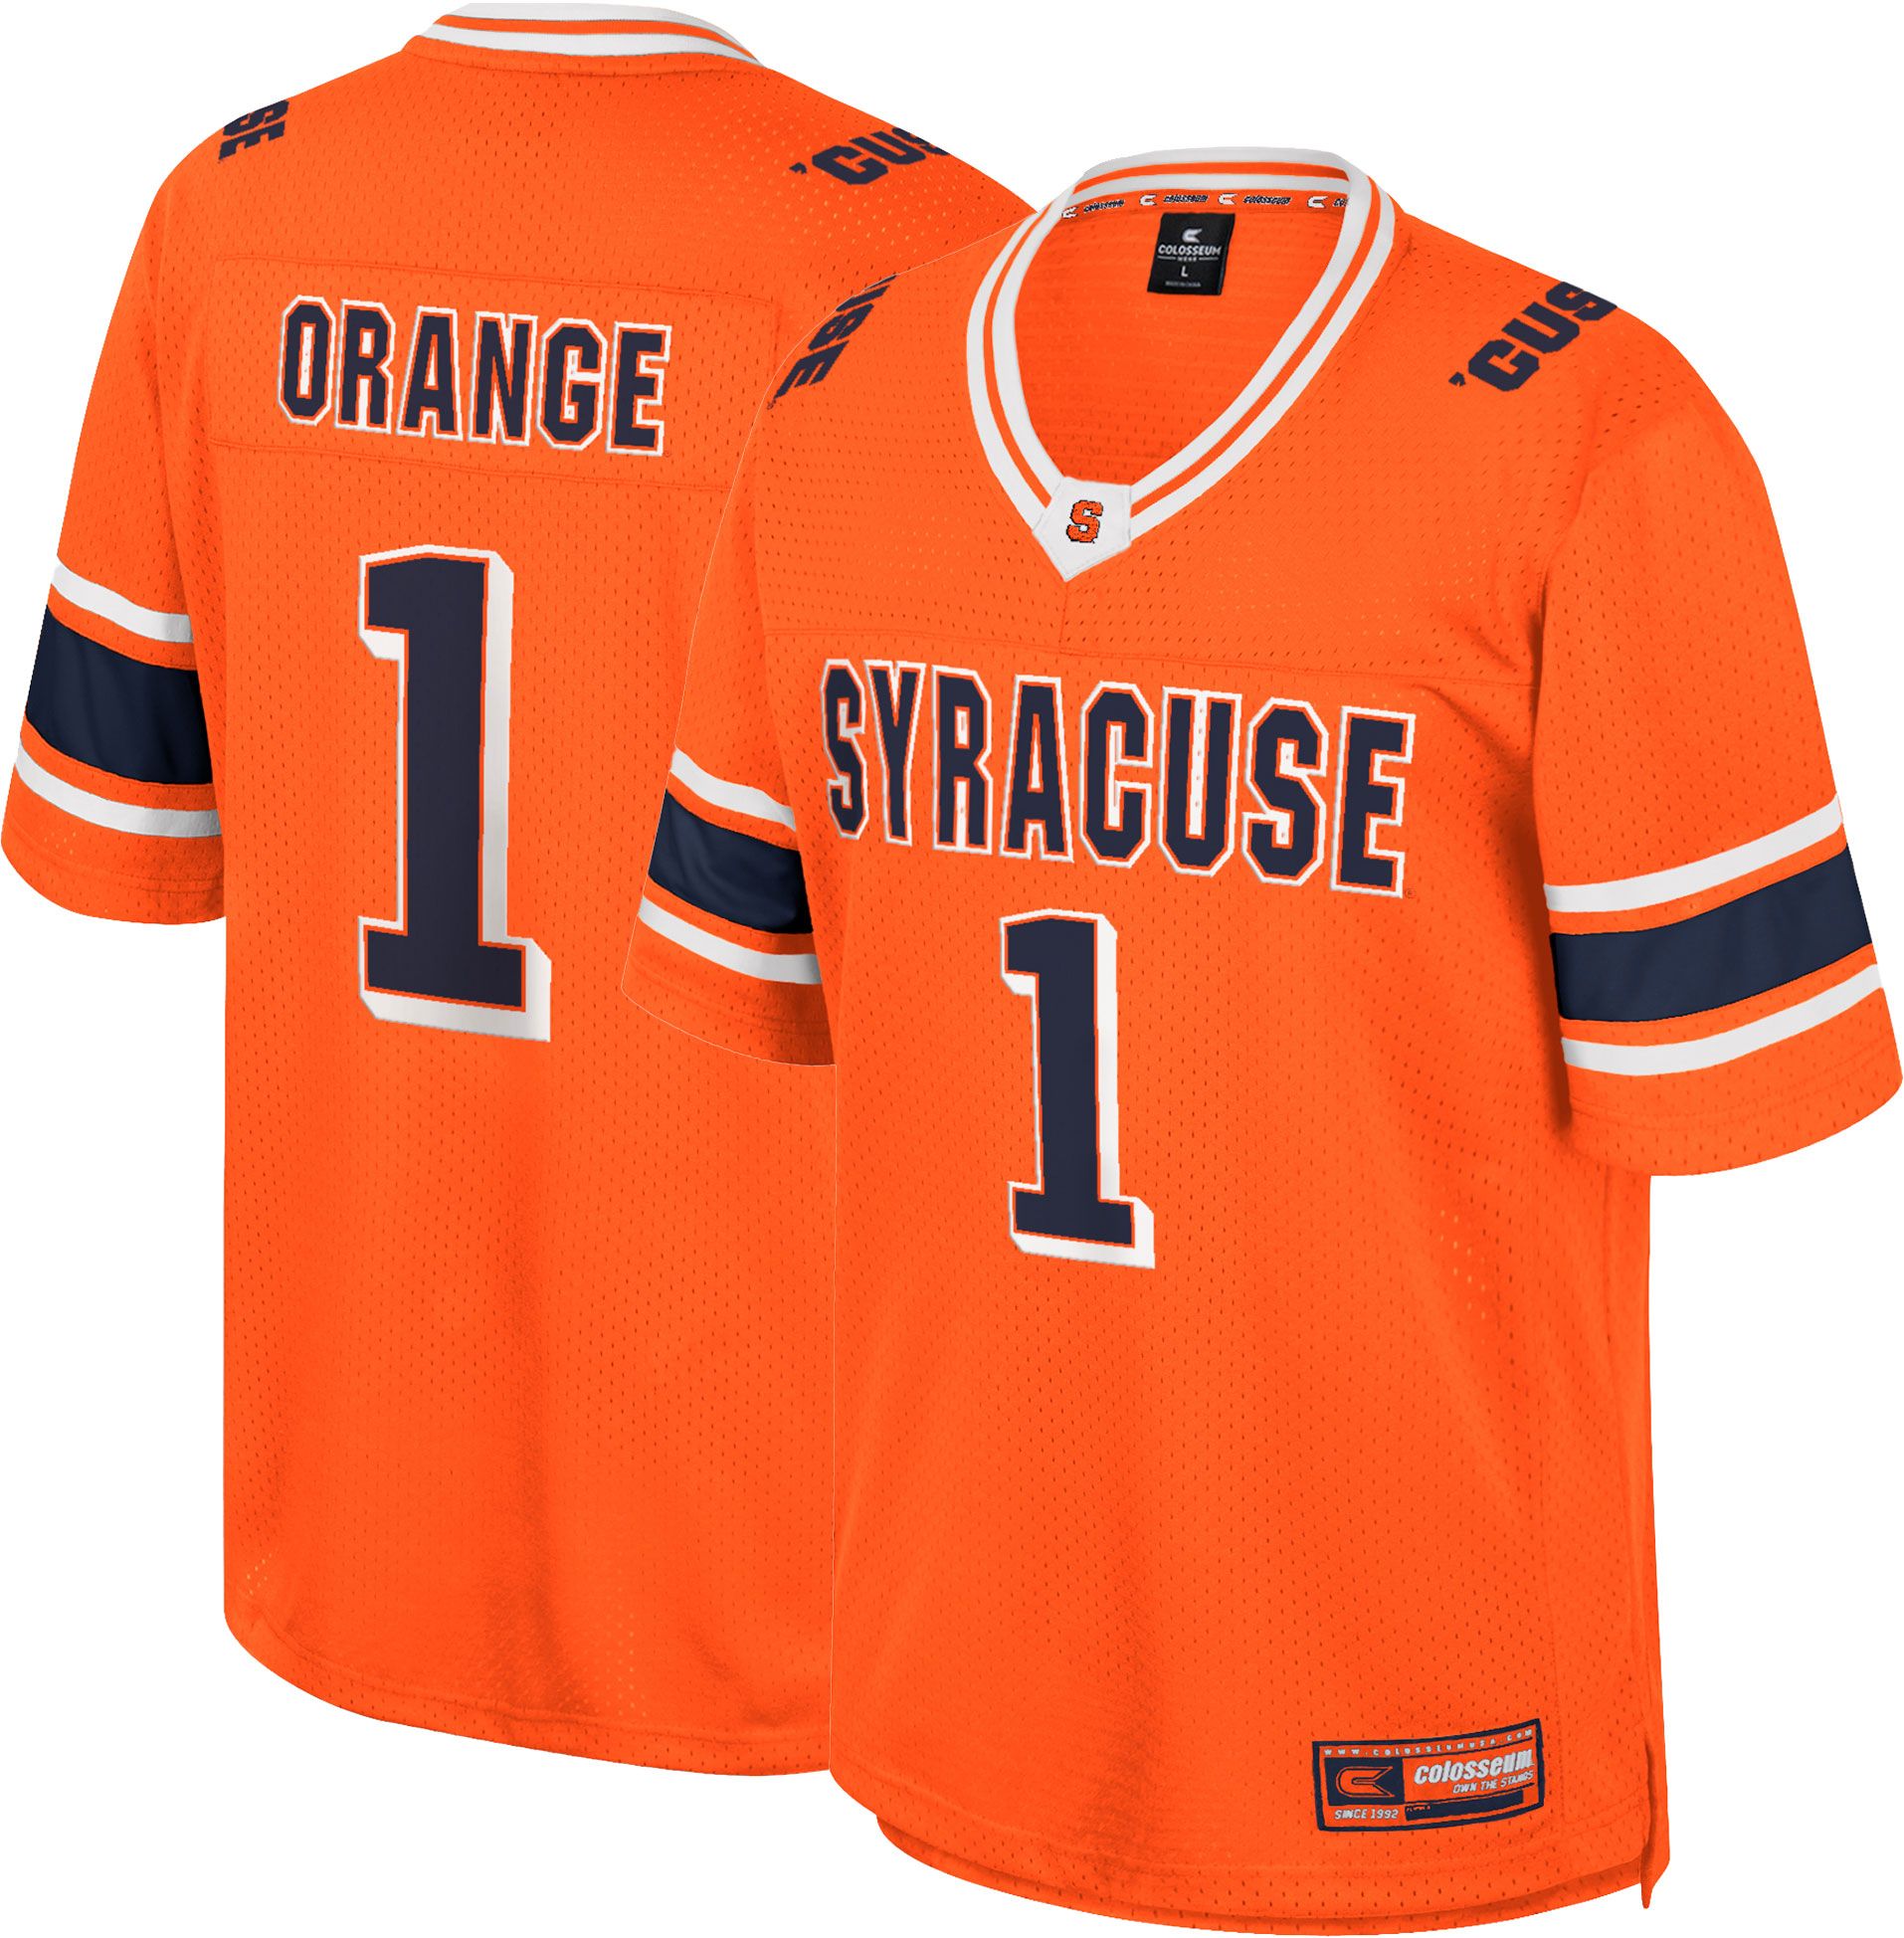 Syracuse Orange football jersey